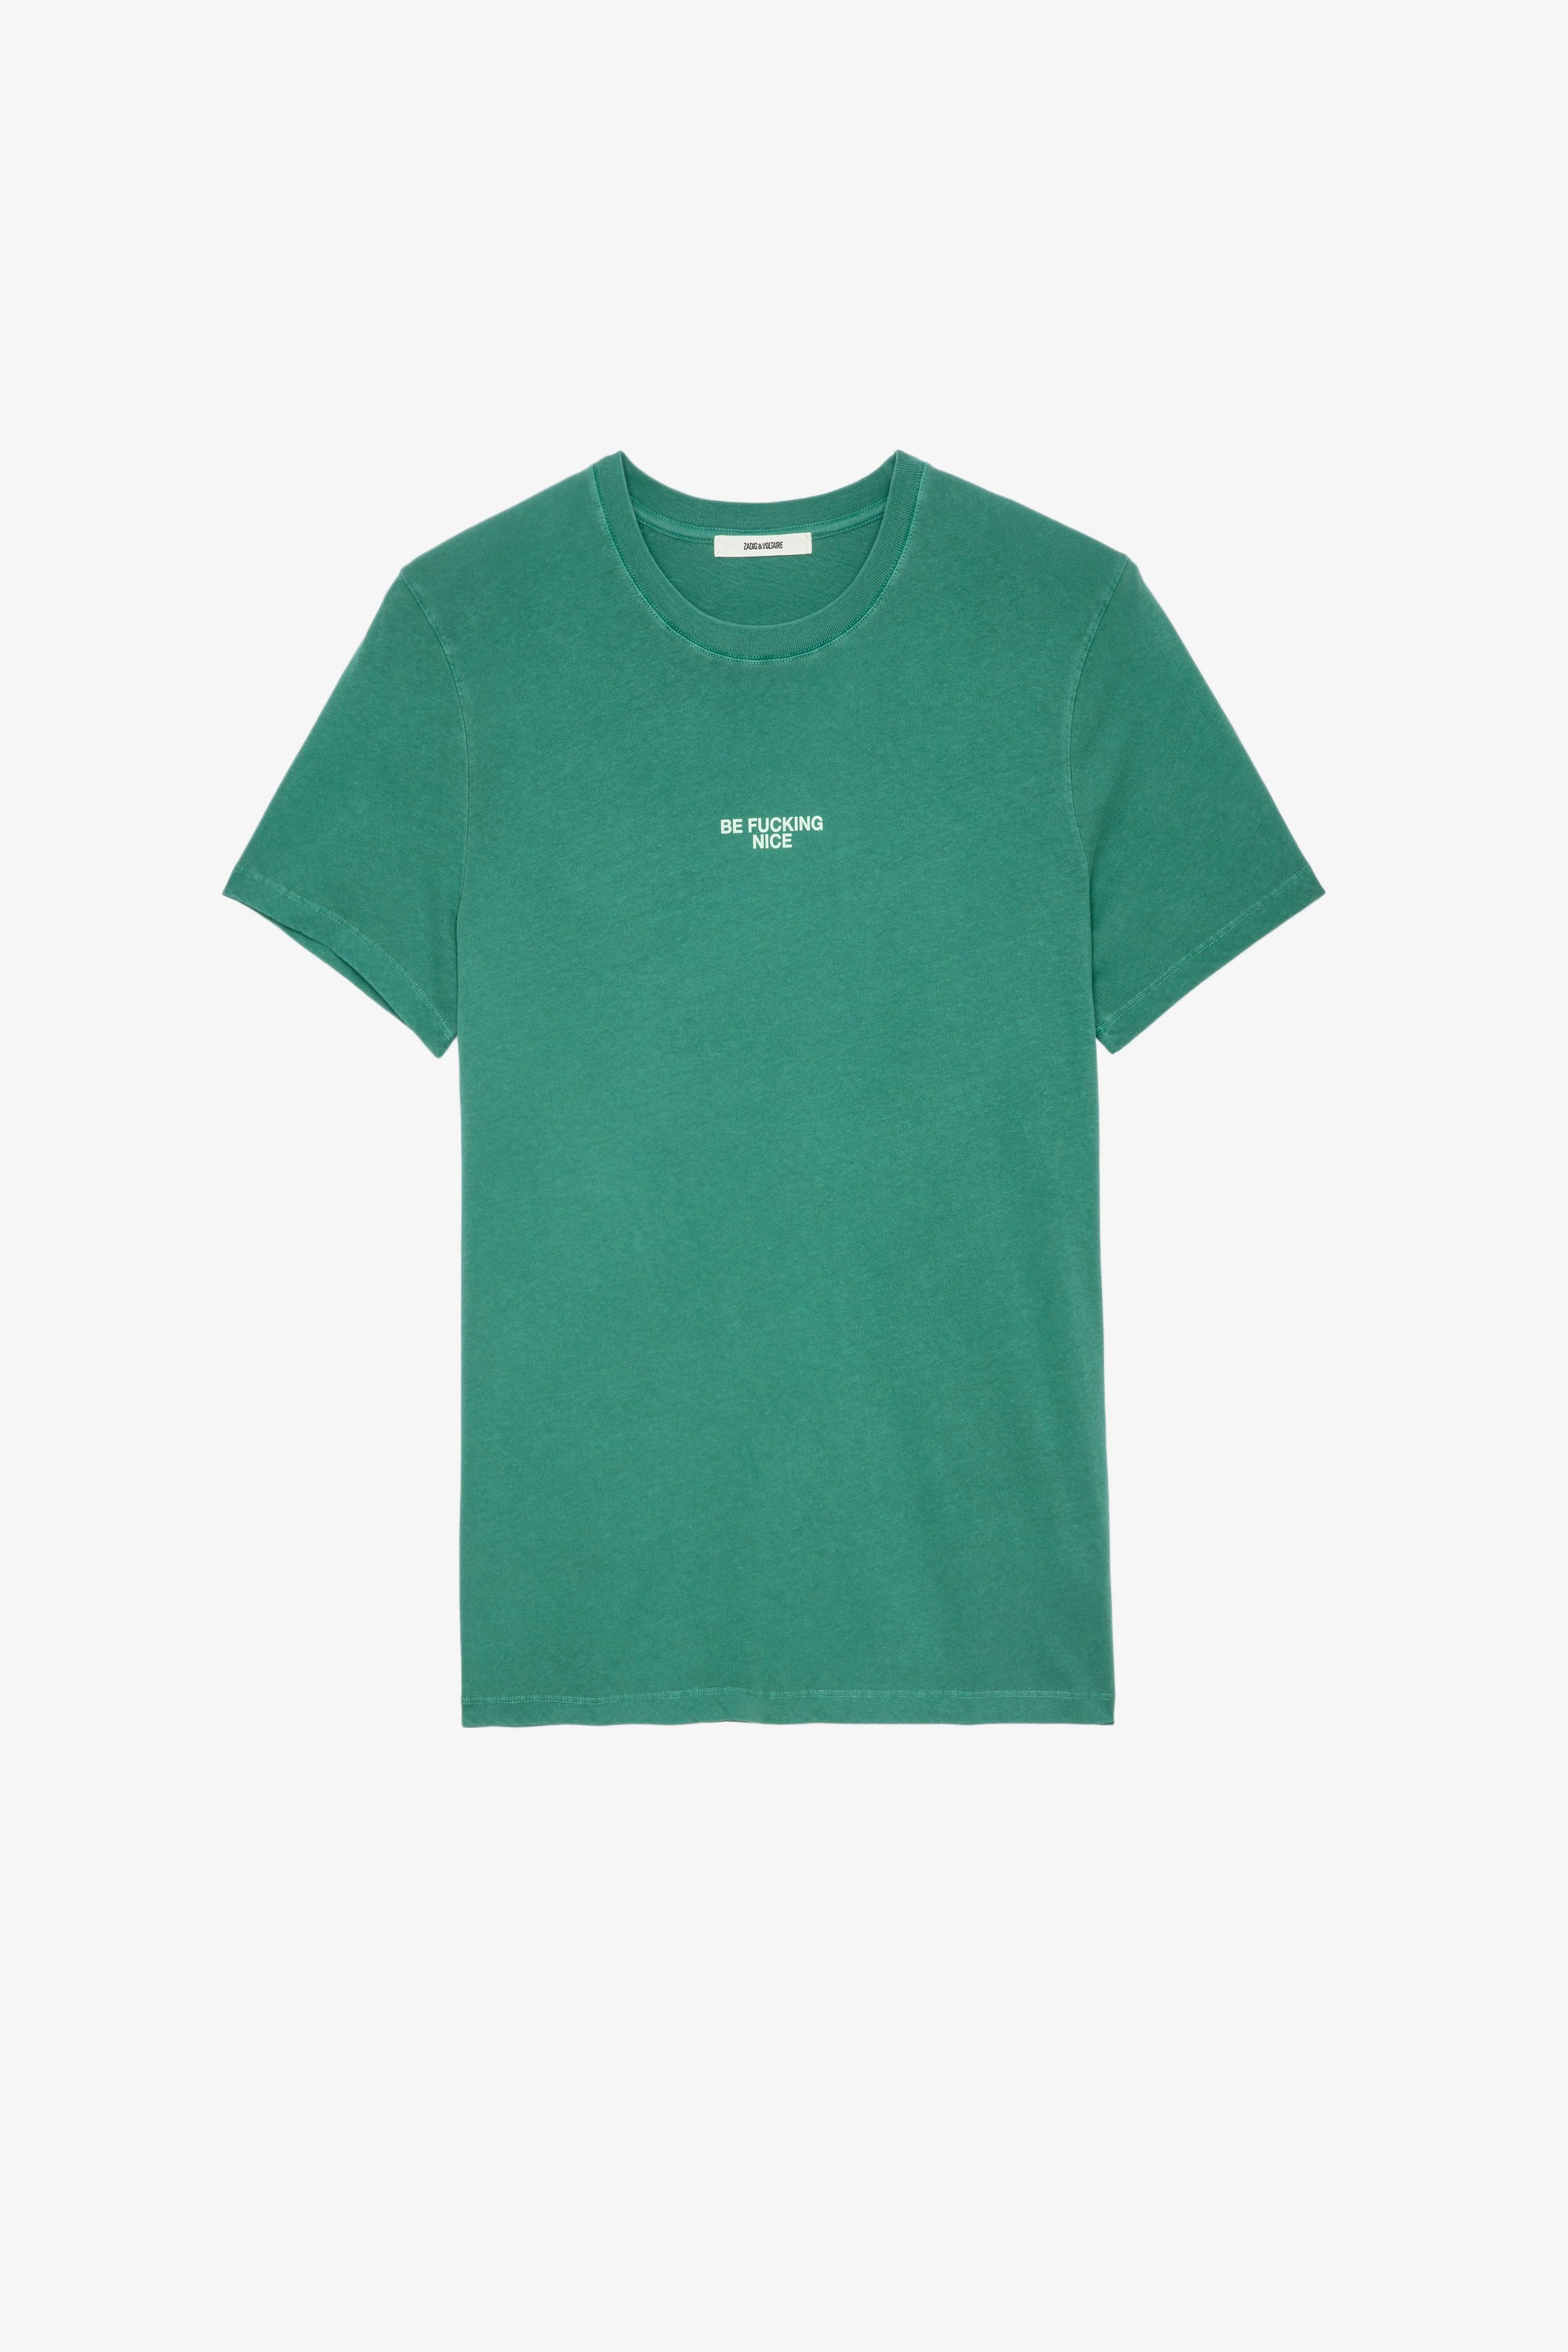 Camiseta Ted Camiseta verde de algodón para hombre con mensaje «Be fucking nice»